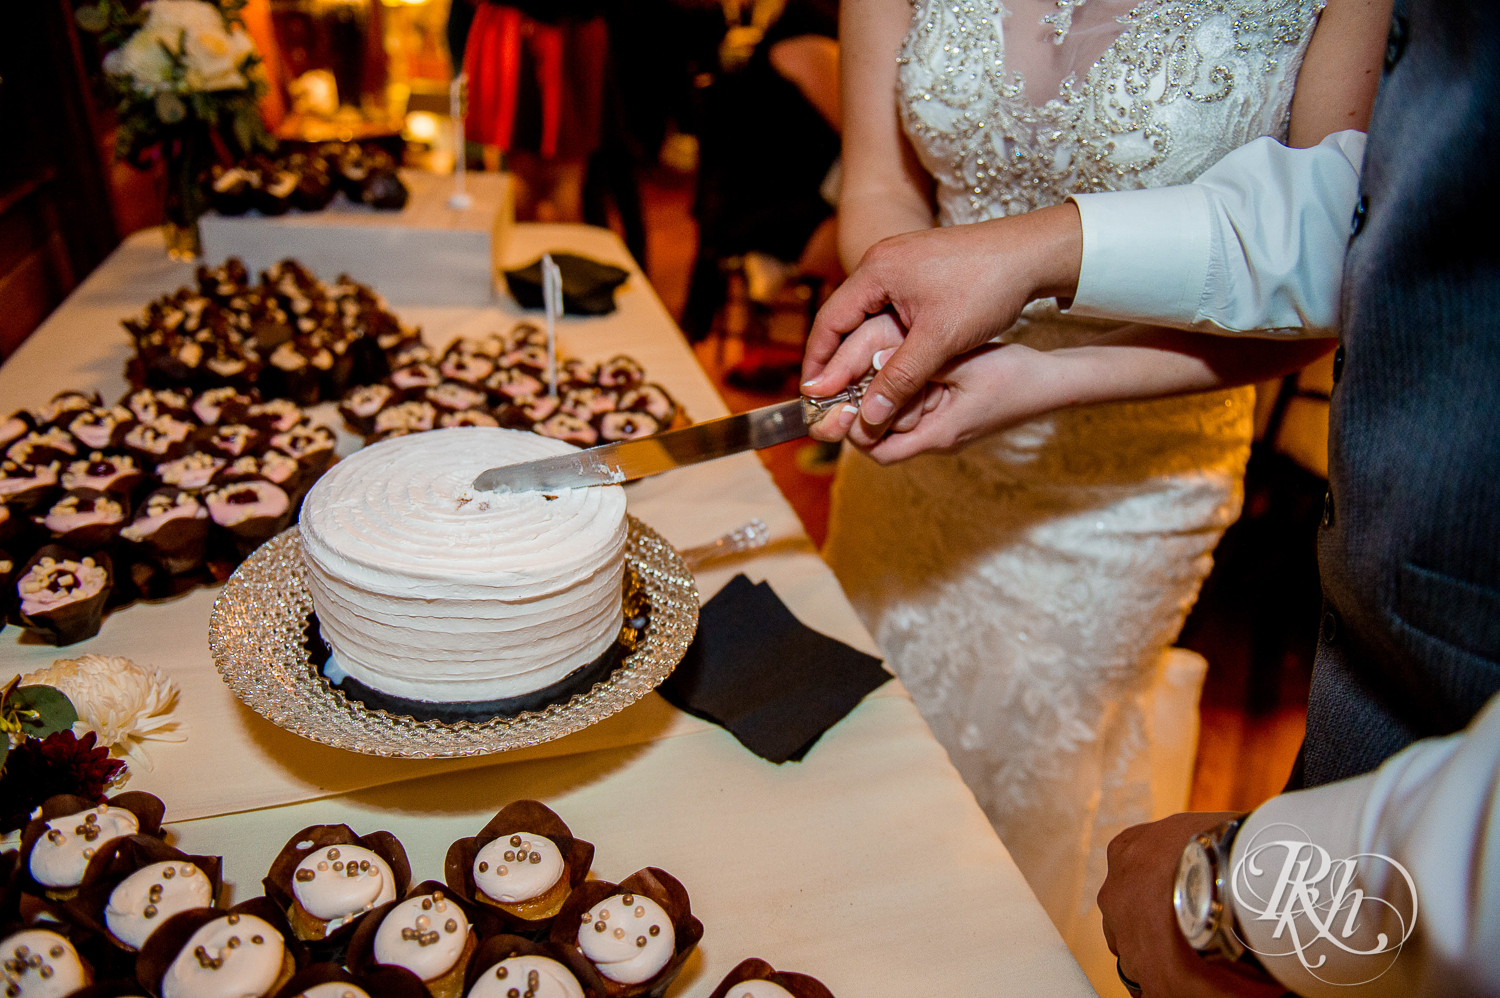 Bride and groom cut wedding cake at Green Acres Event Center barn wedding in Eden Prairie, Minnesota.